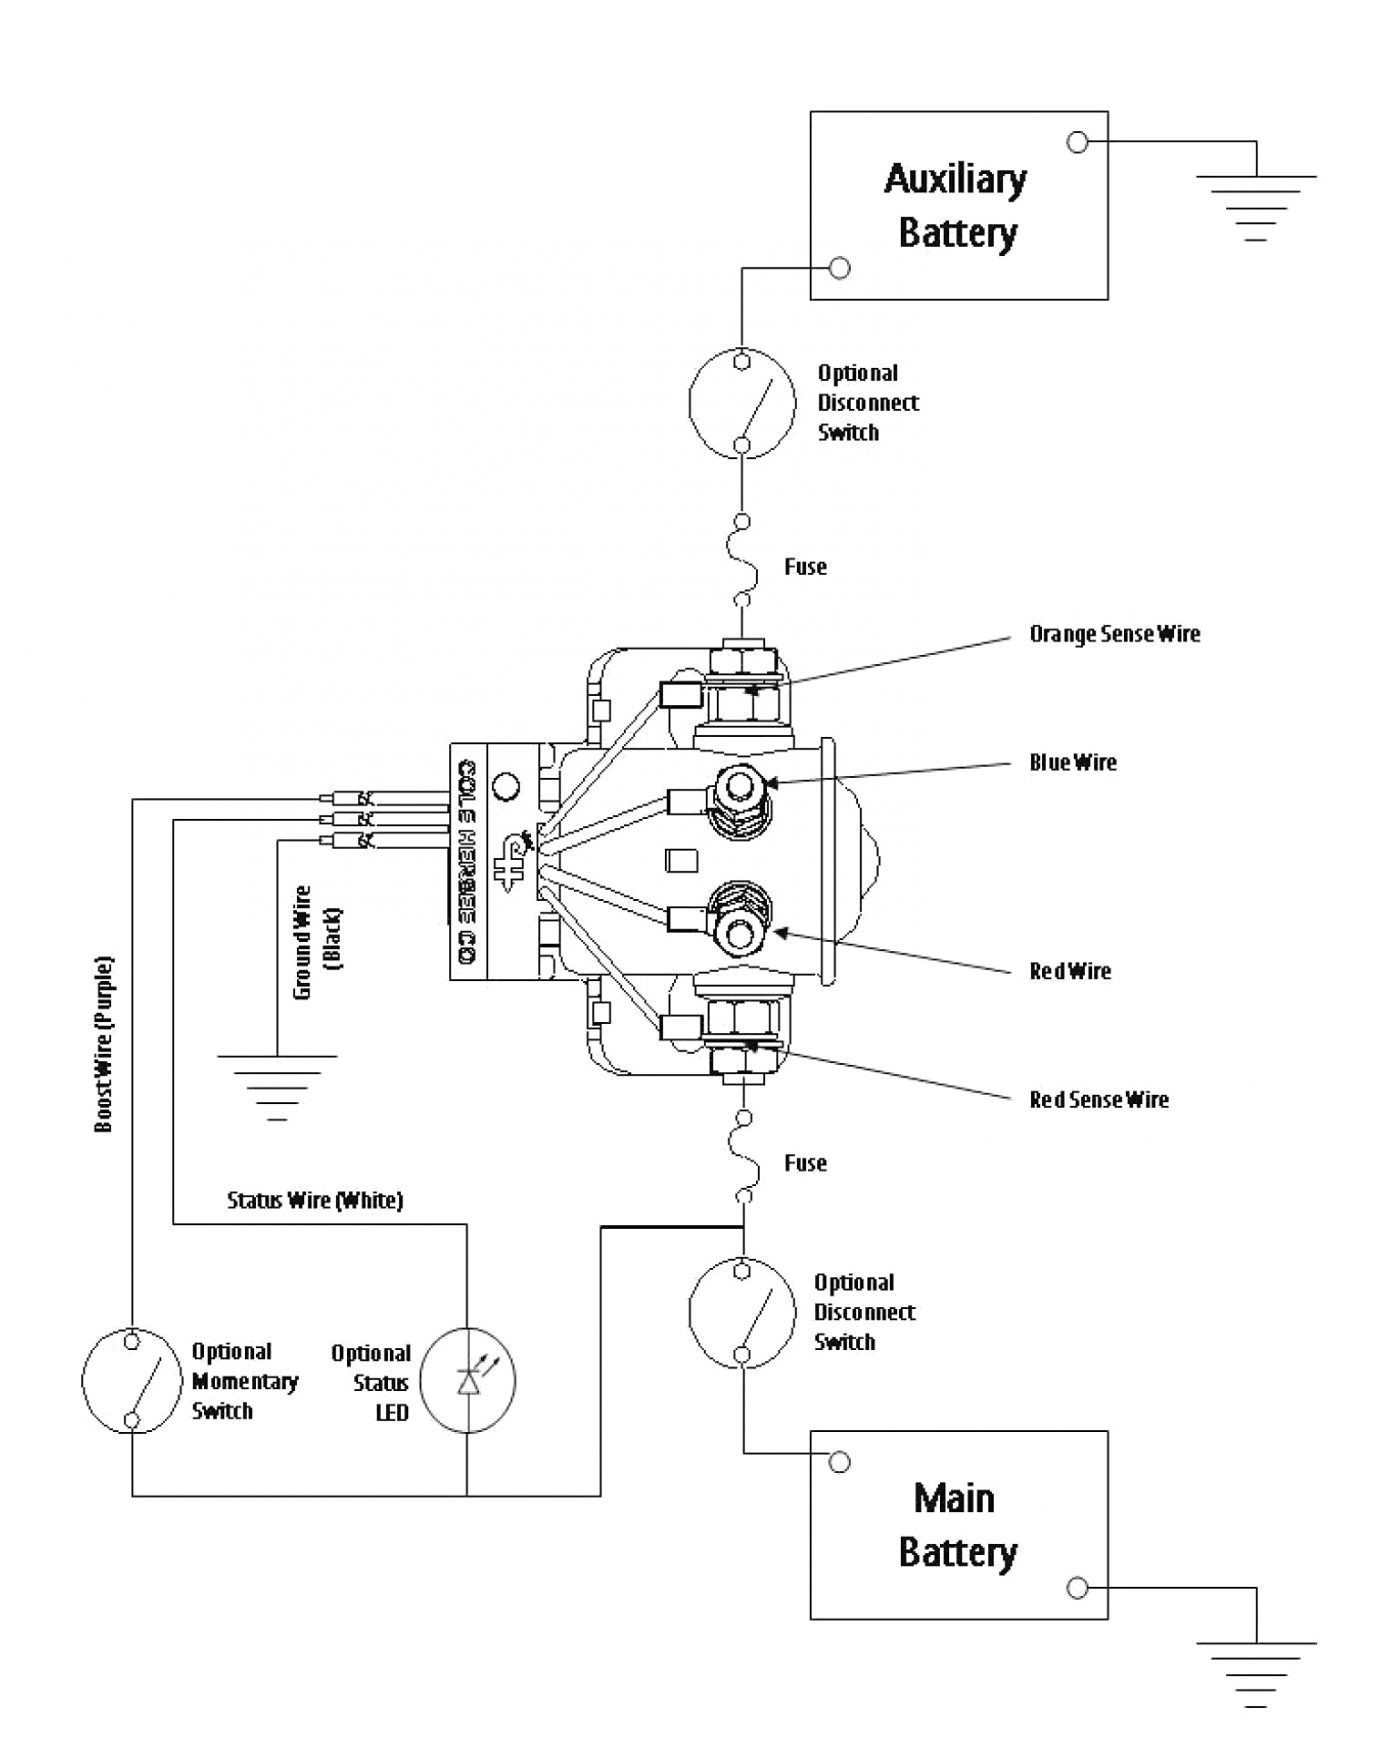 waste oil wiring diagram enthusiast wiring diagrams u2022 rh rasalibre co Reznor Gas Heater Wiring Diagram Reznor Heater Wiring Diagram 1984